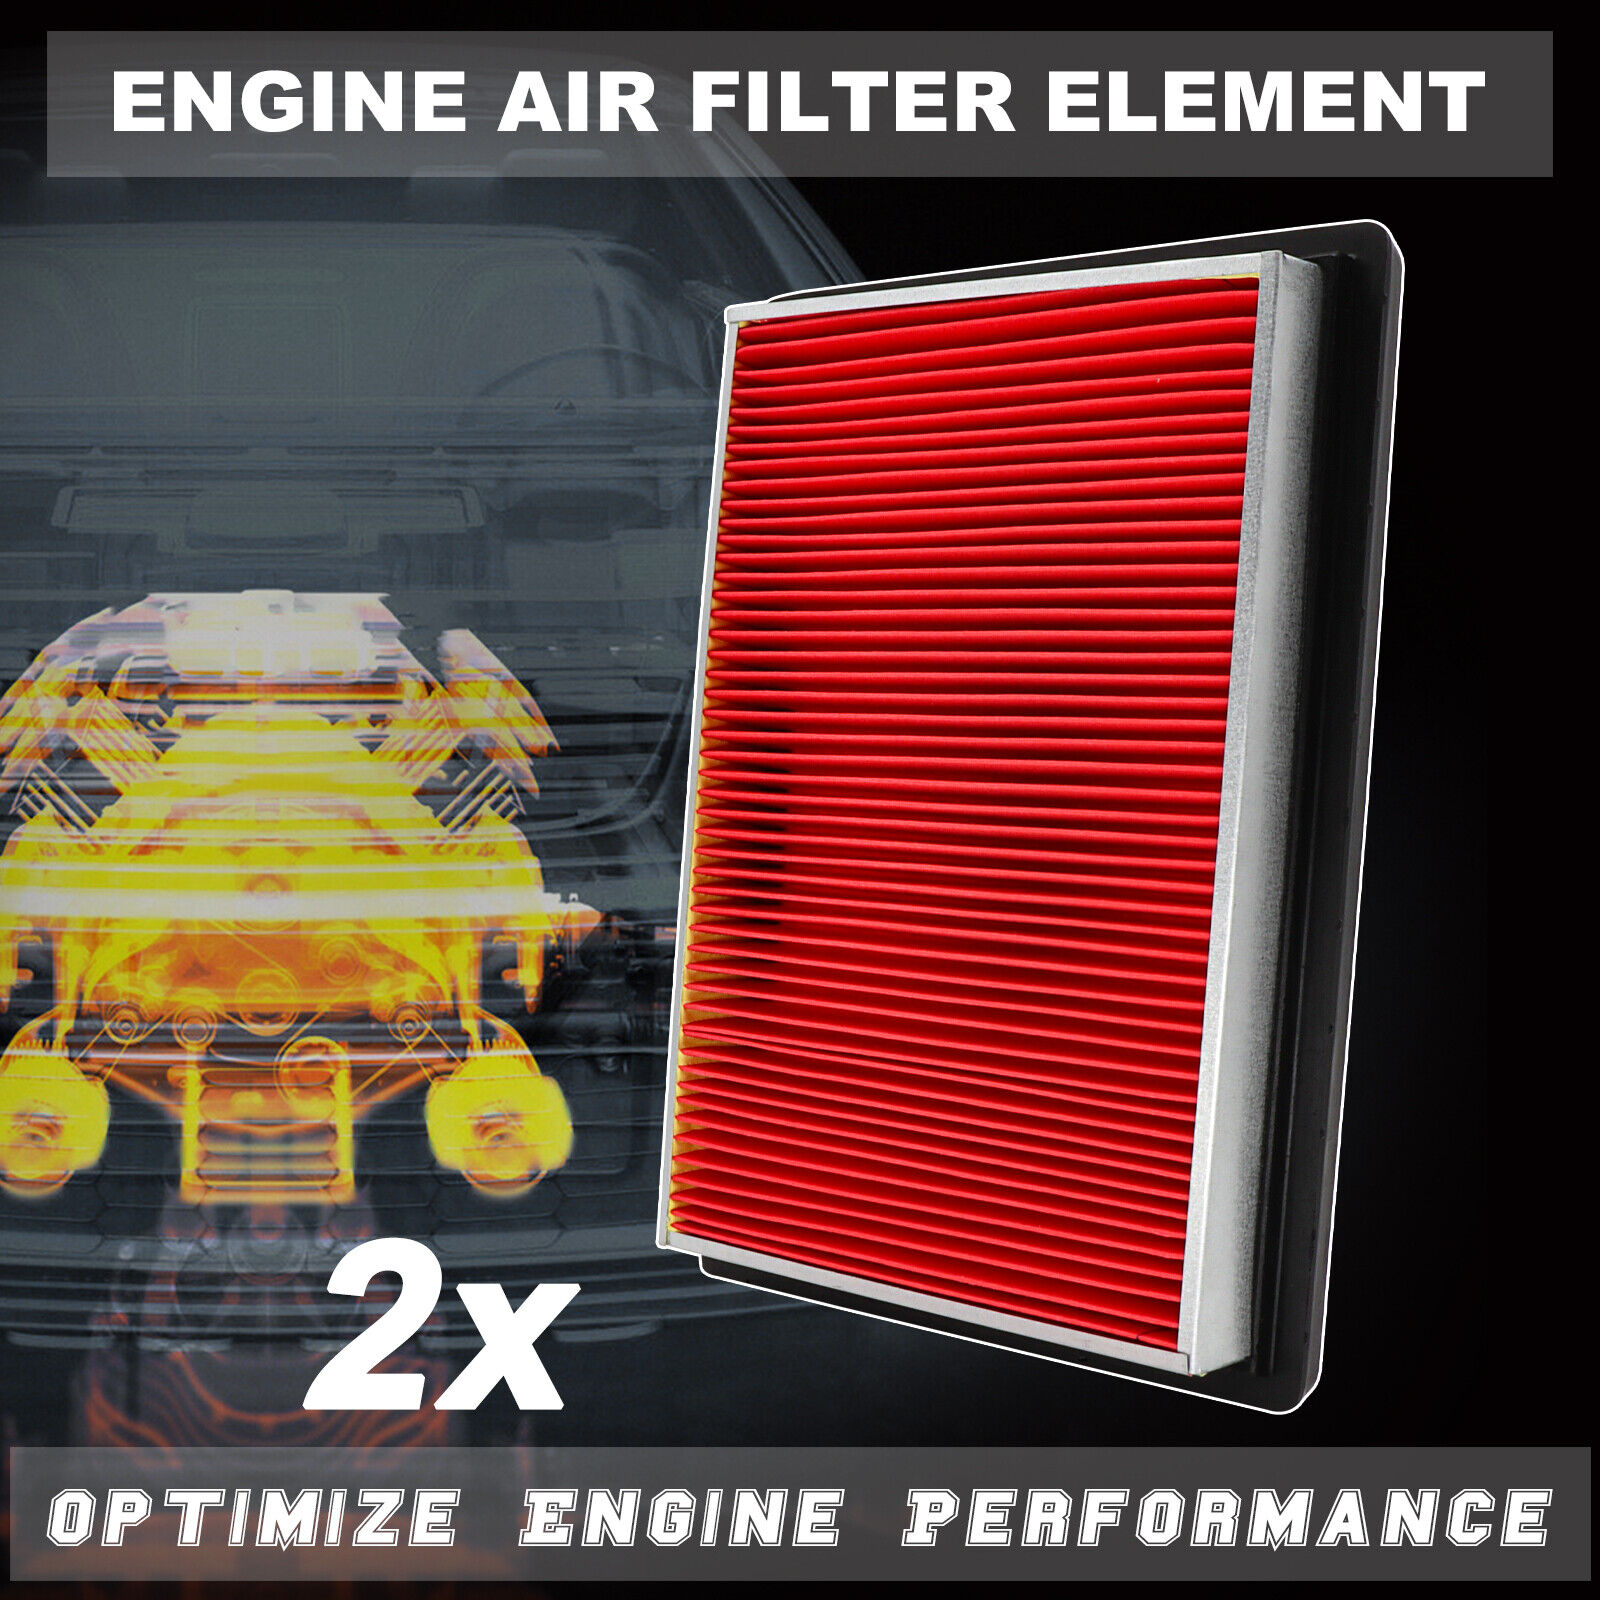 OEMASSIVE Engine Air Filter For INFINITI FX35 Q50 300ZX Sentra 2X